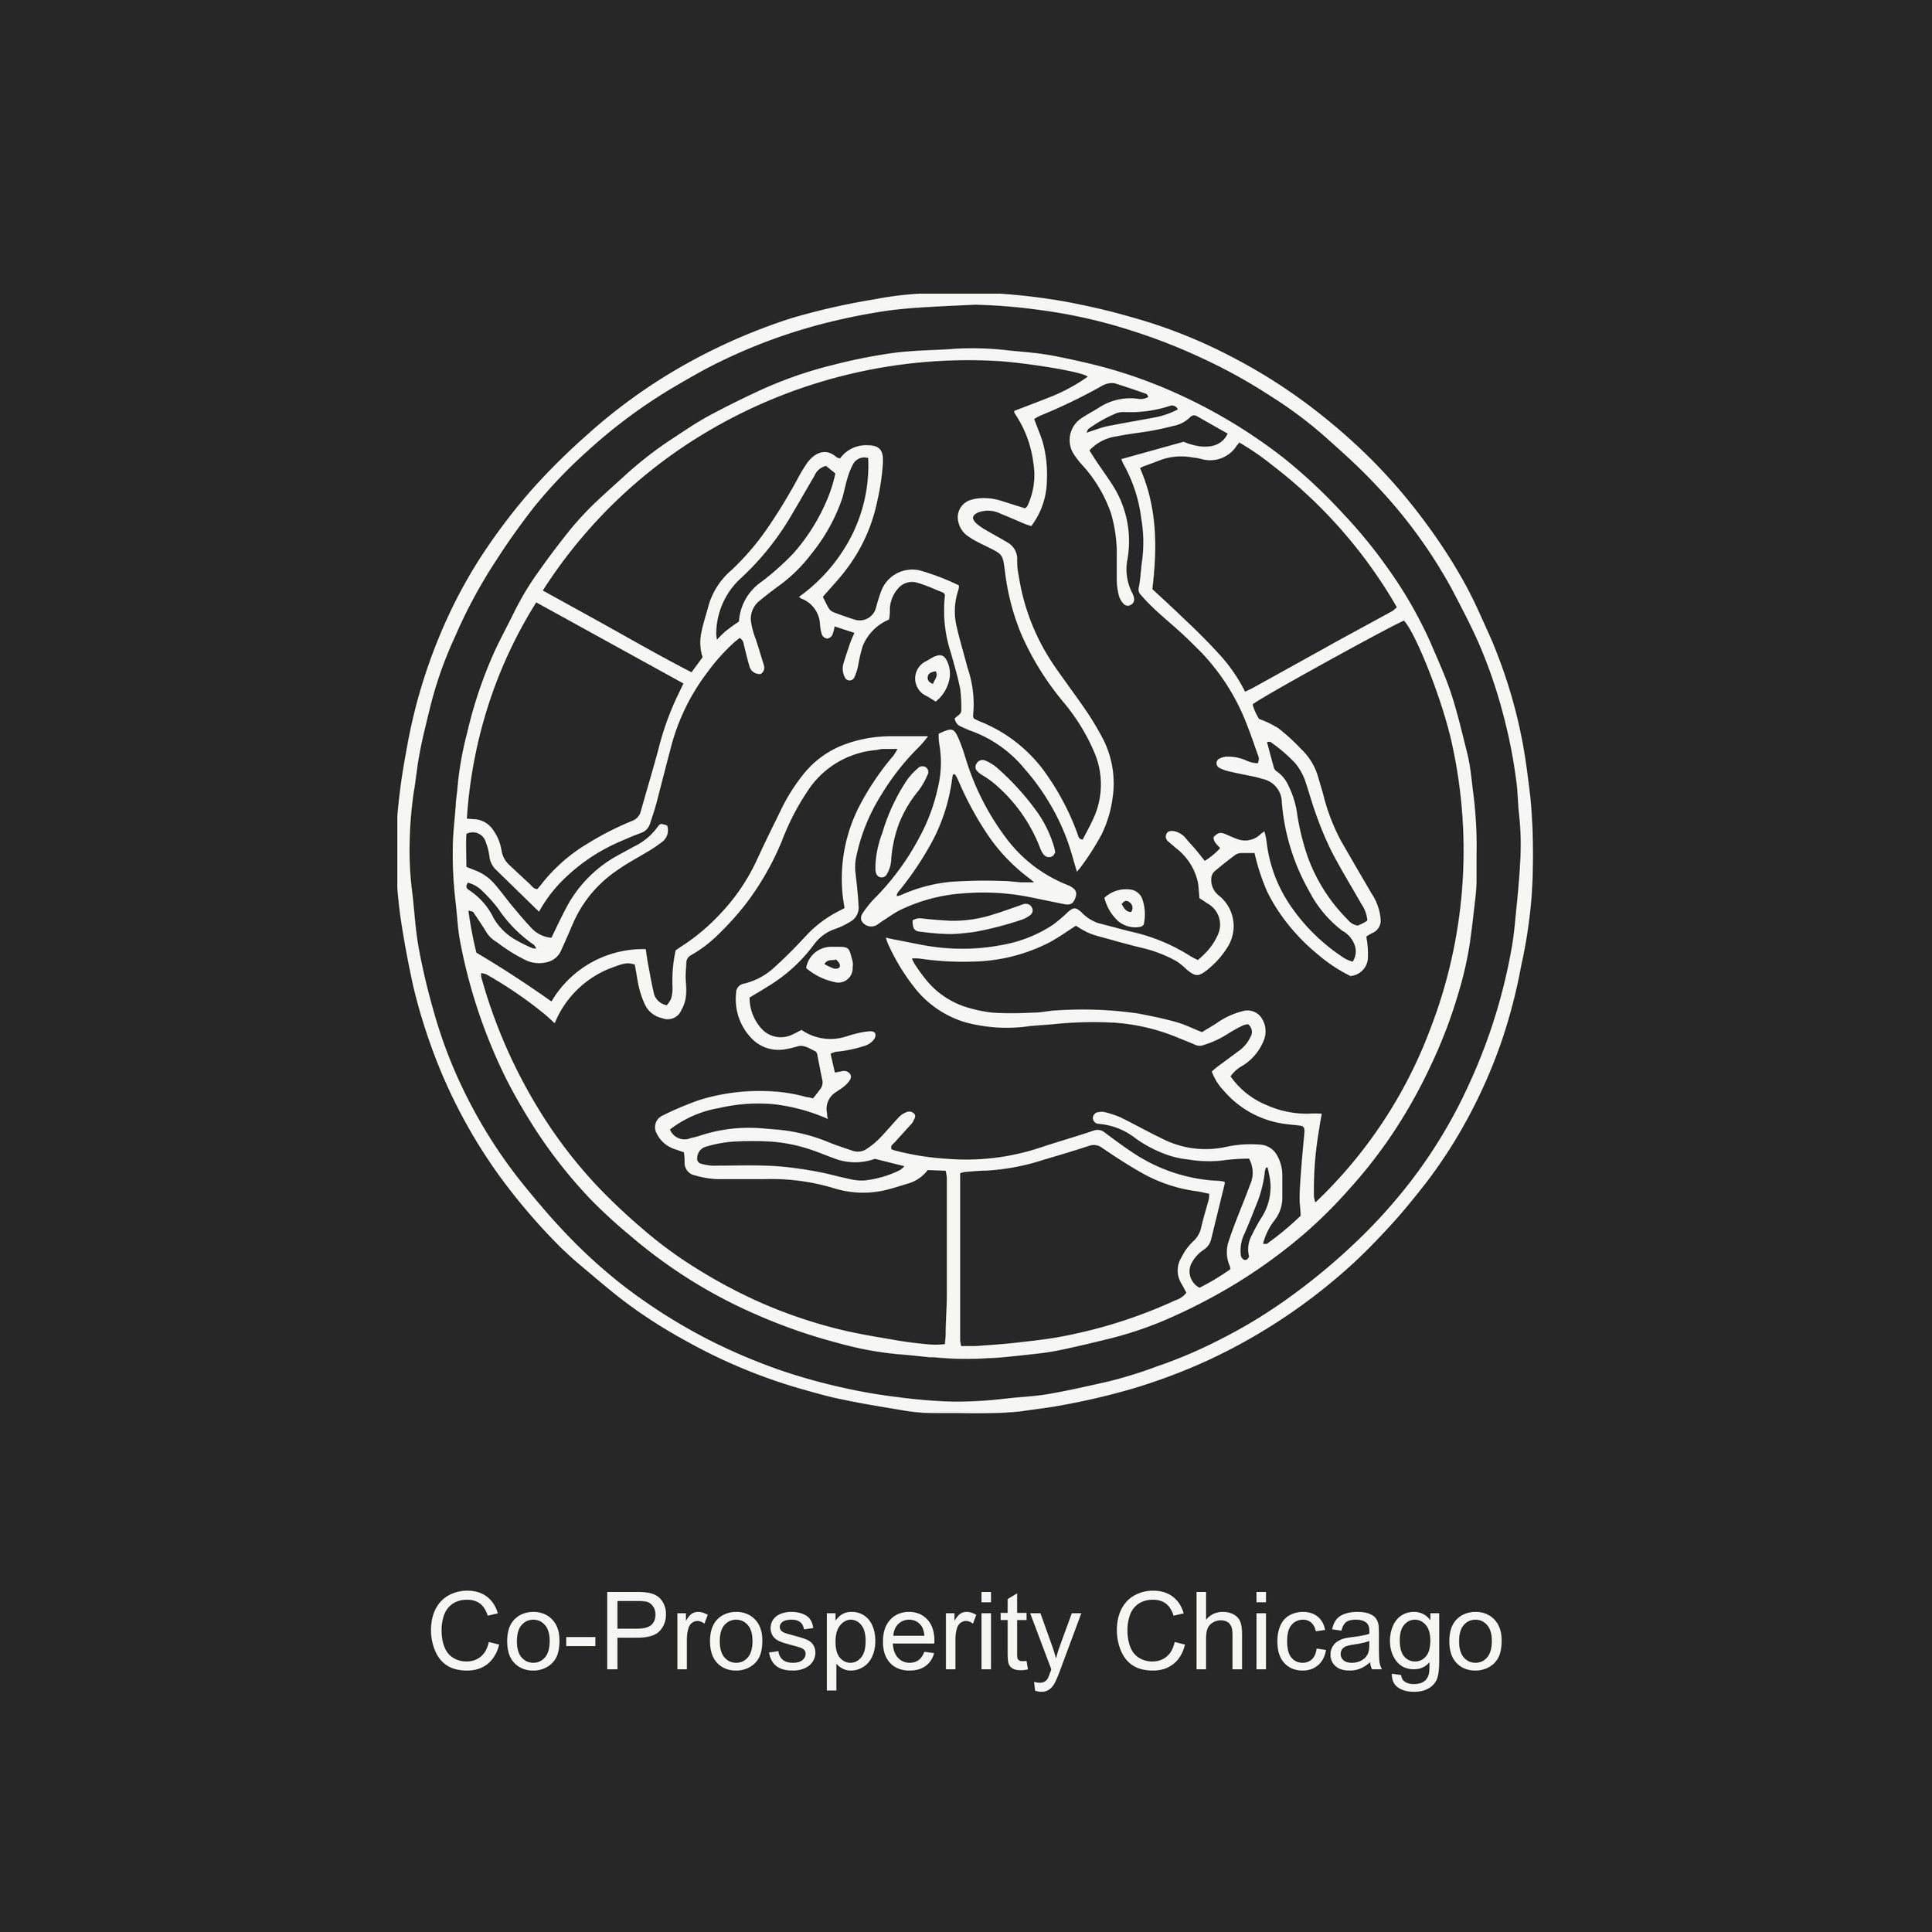 Co-Prosperity Chicago